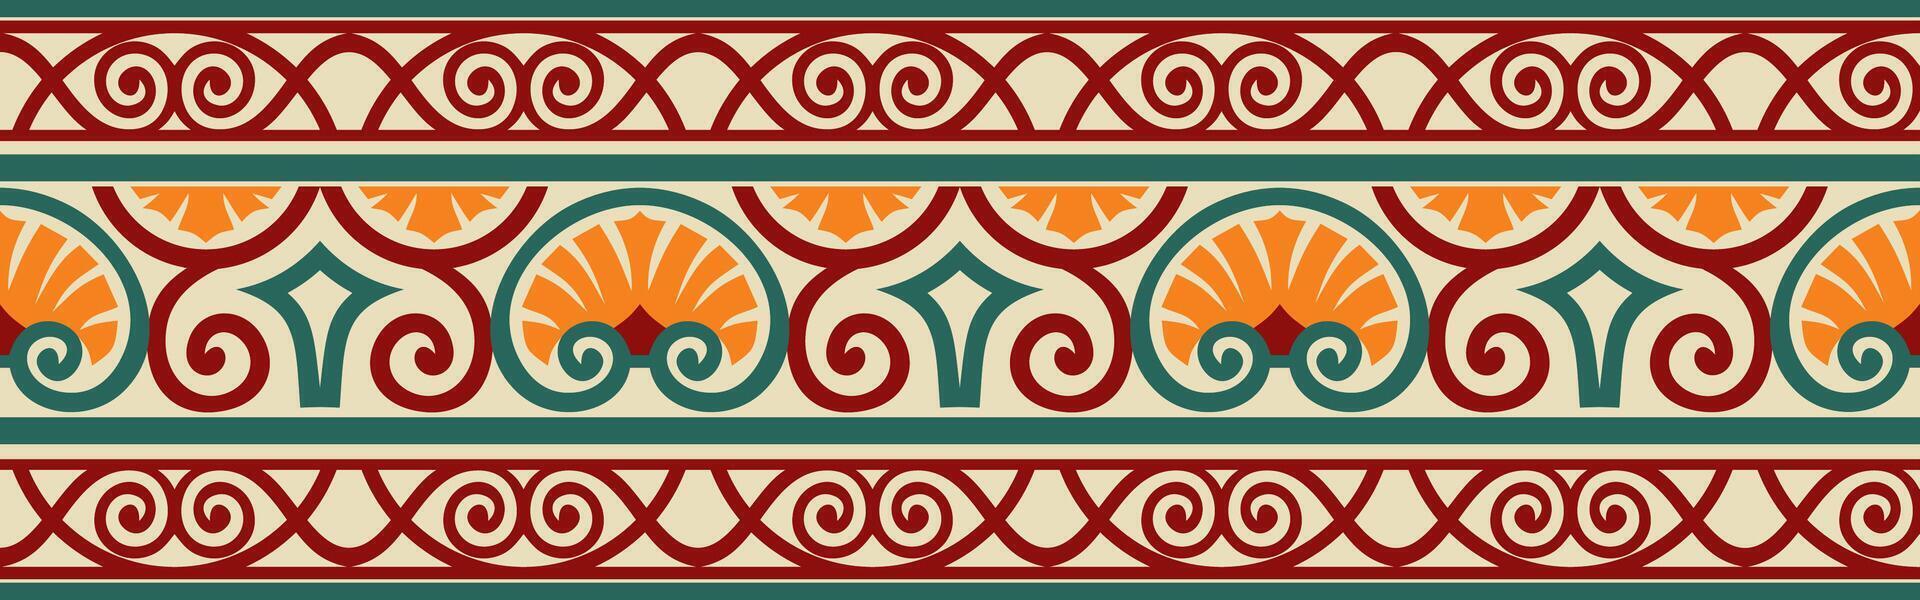 Vector colored seamless classic renaissance ornament. Endless european border, revival style frame